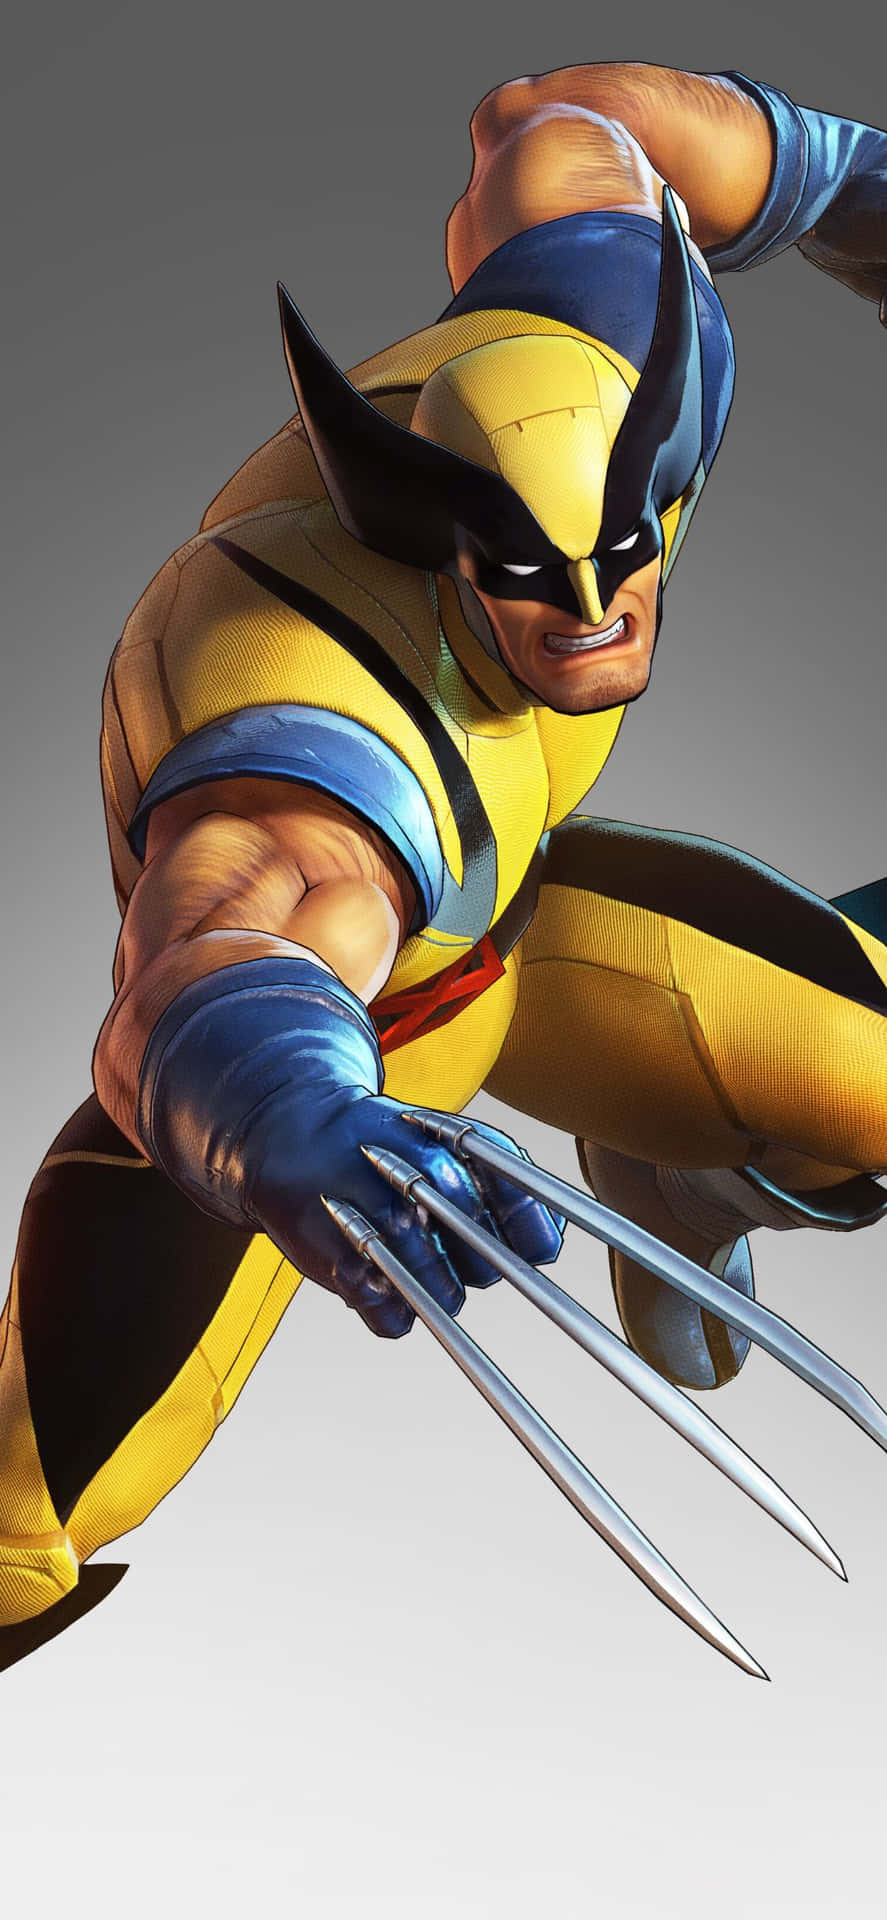 Wolverine Vs Hulk IPhone Wallpaper HD  IPhone Wallpapers  iPhone  Wallpapers